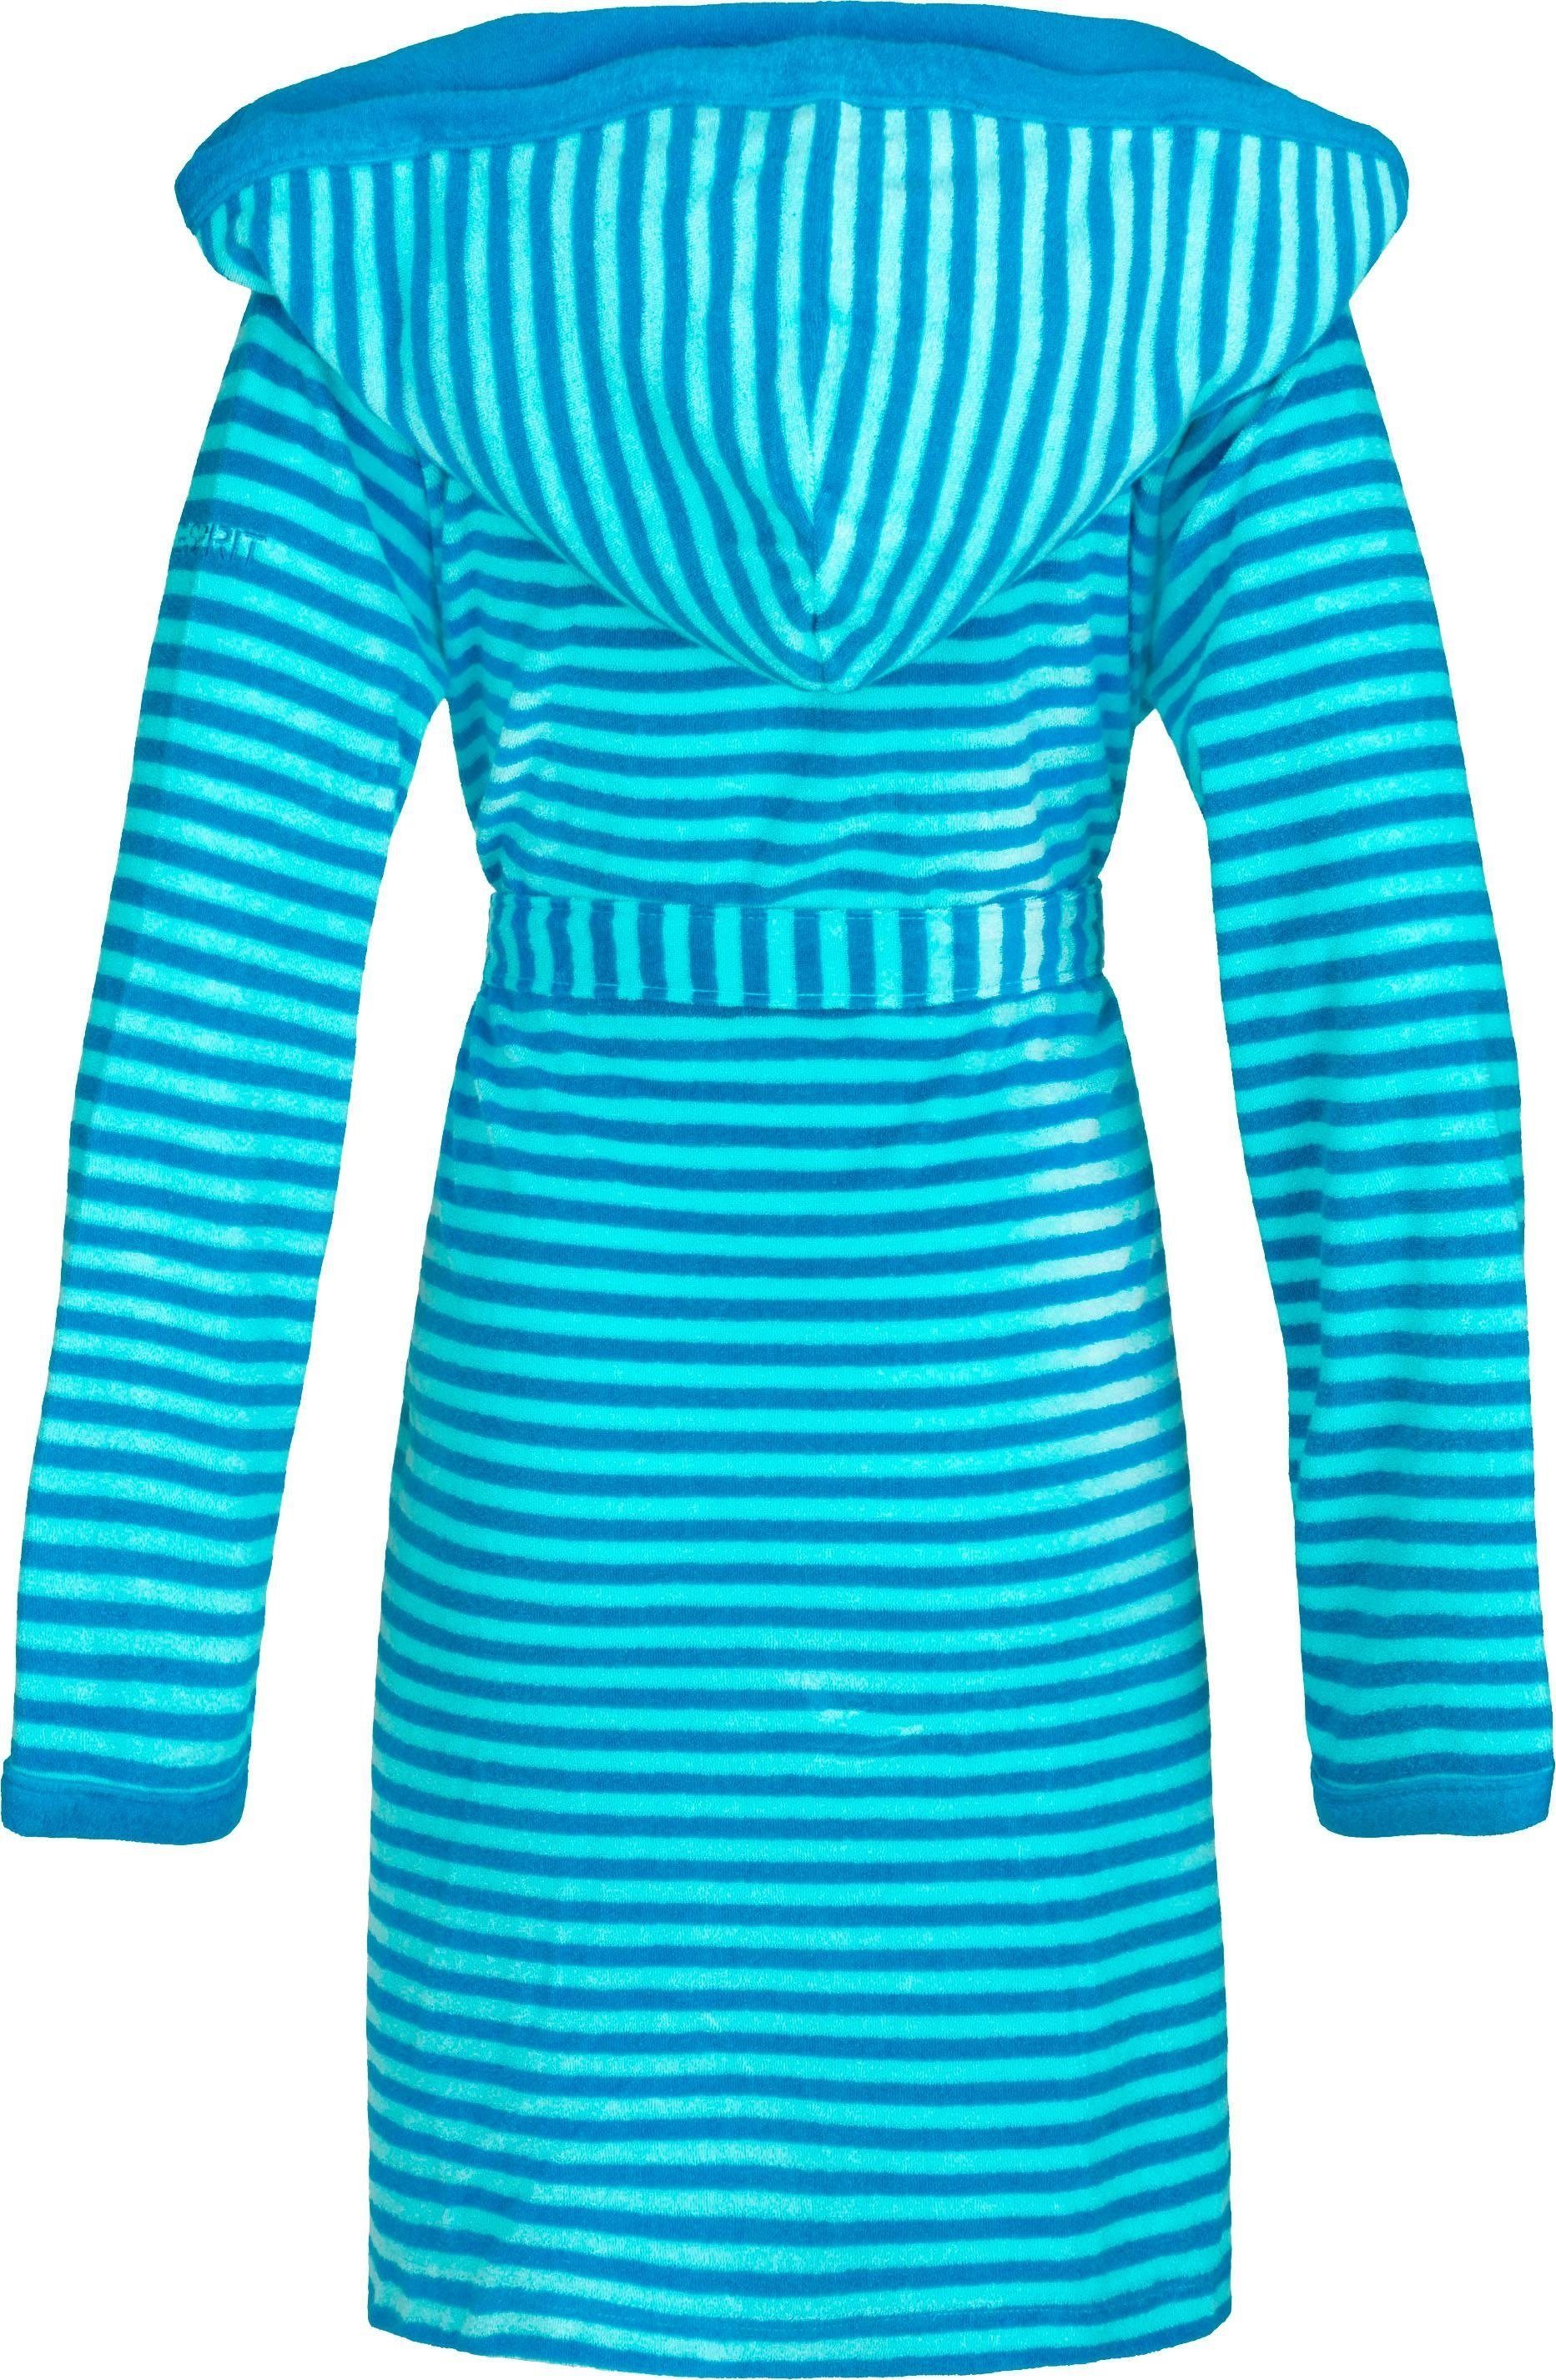 Kapuze, mit Hoody, Rundstrickware, gestreift turquoise Kurzform, Esprit Kapuze, Damenbademantel Gürtel, Striped